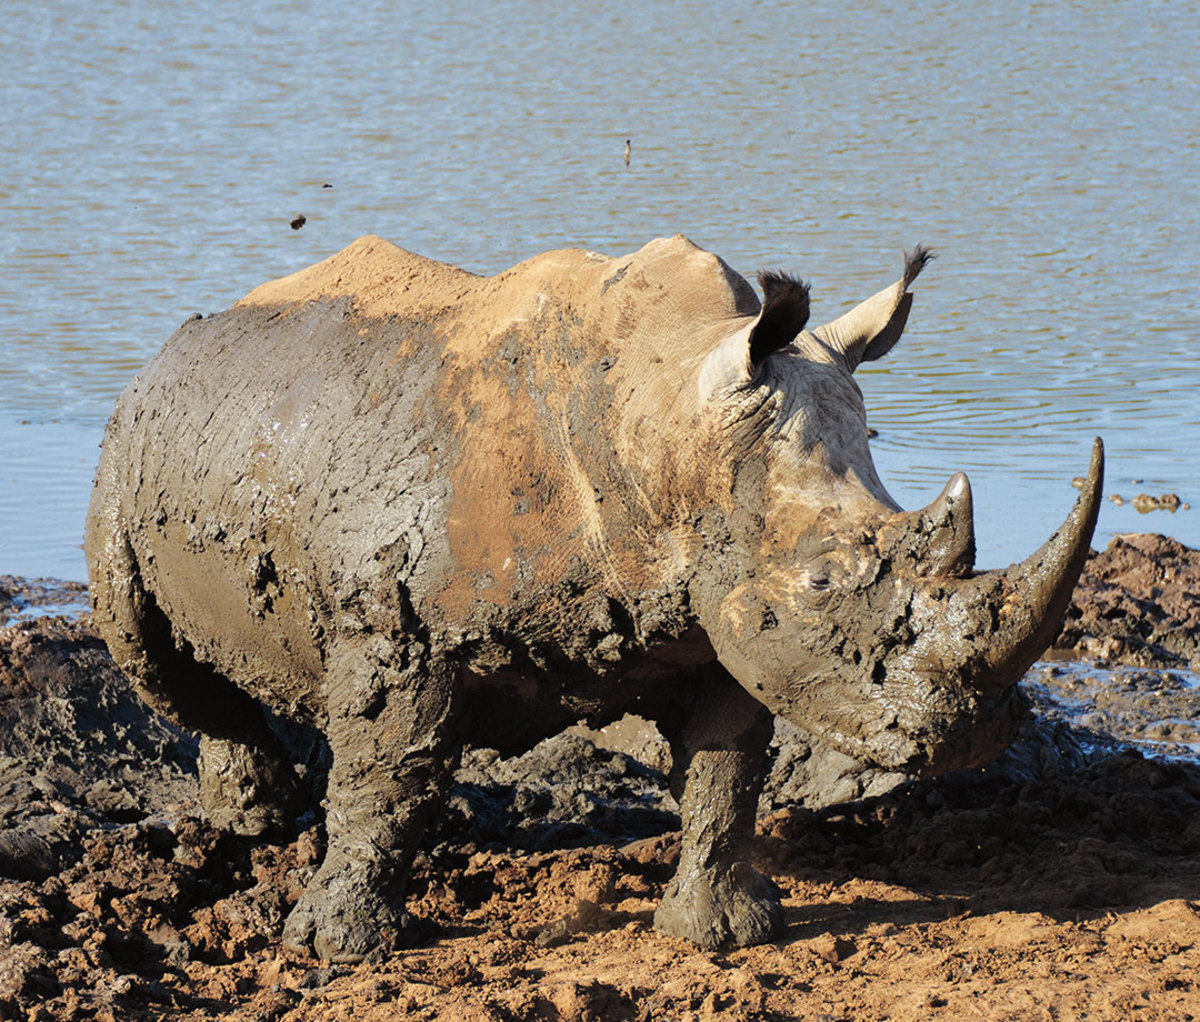 Rhino covered in mud